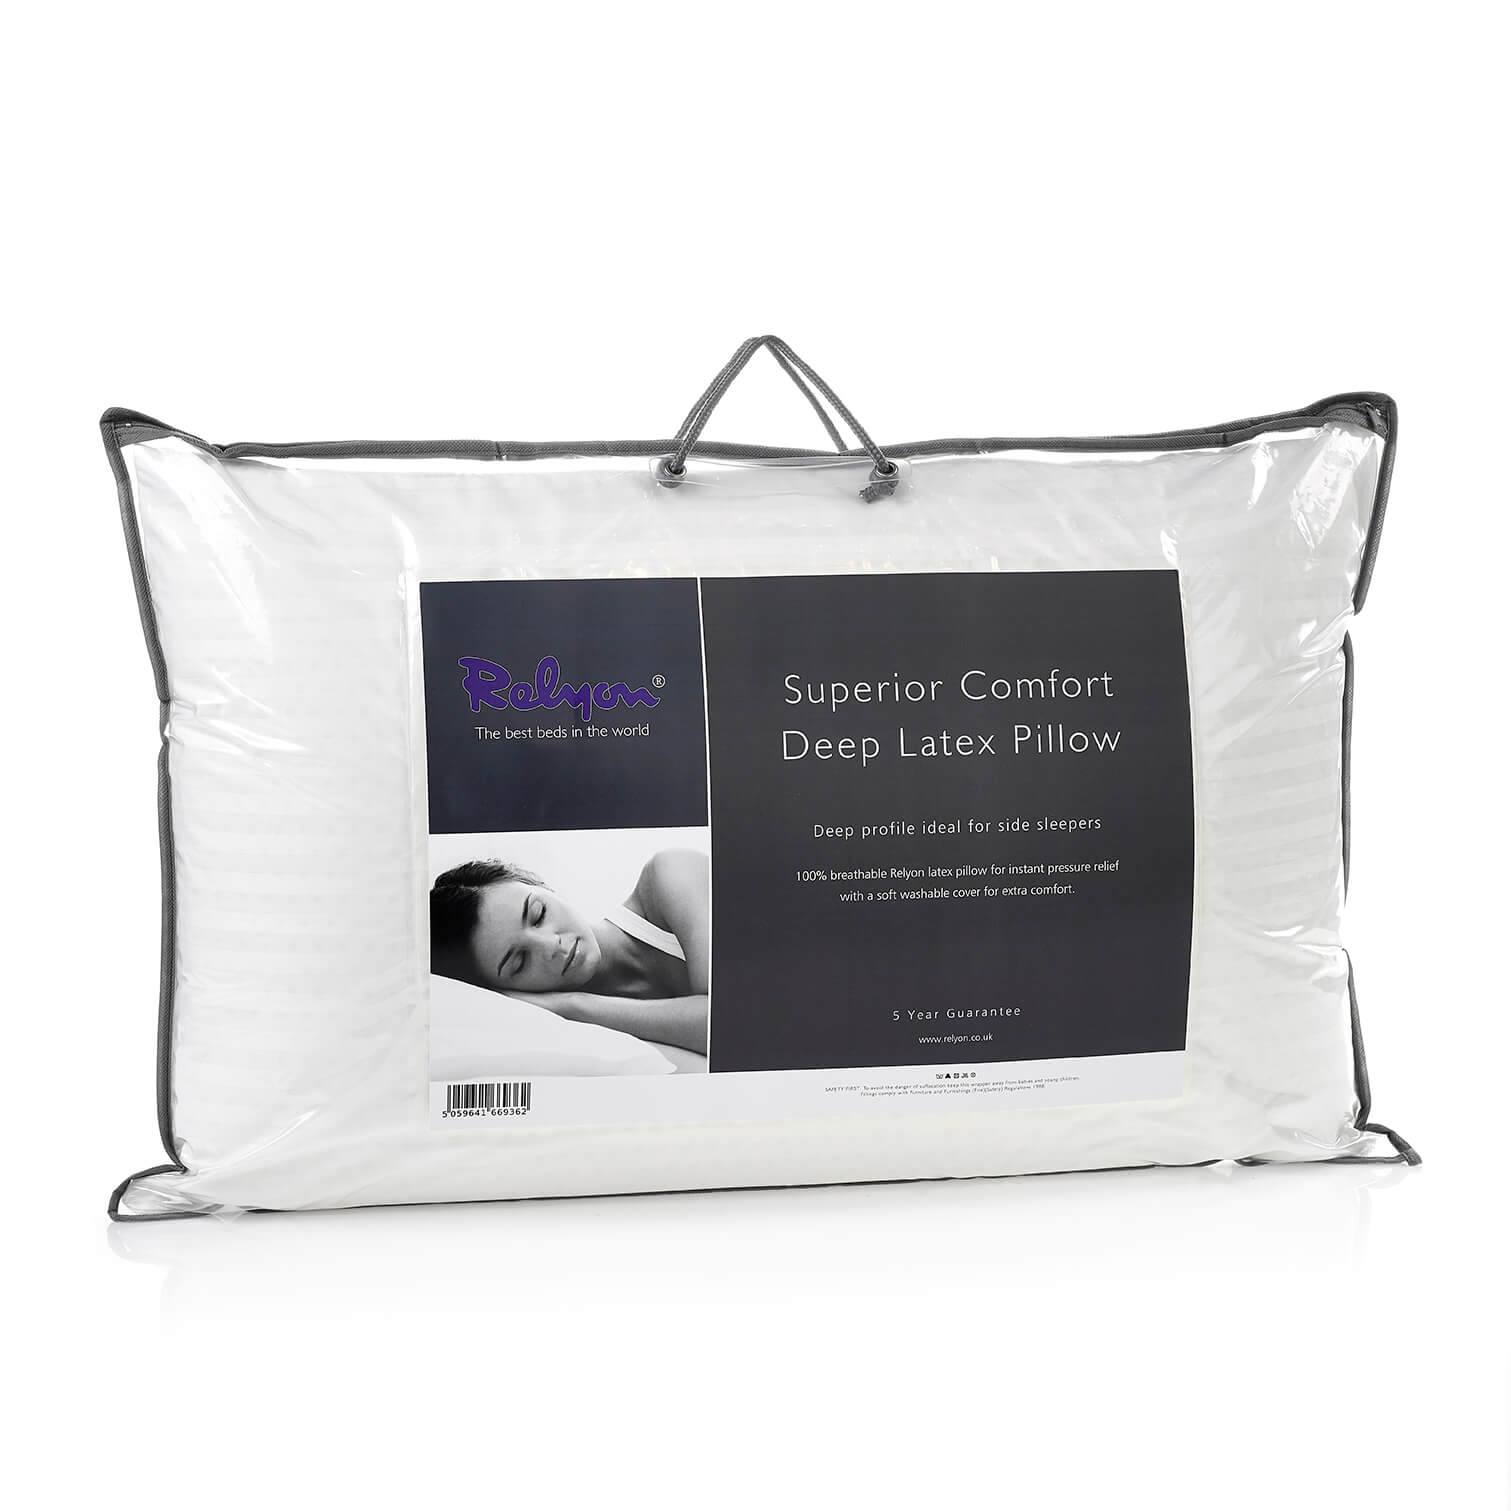 Prestige pillow